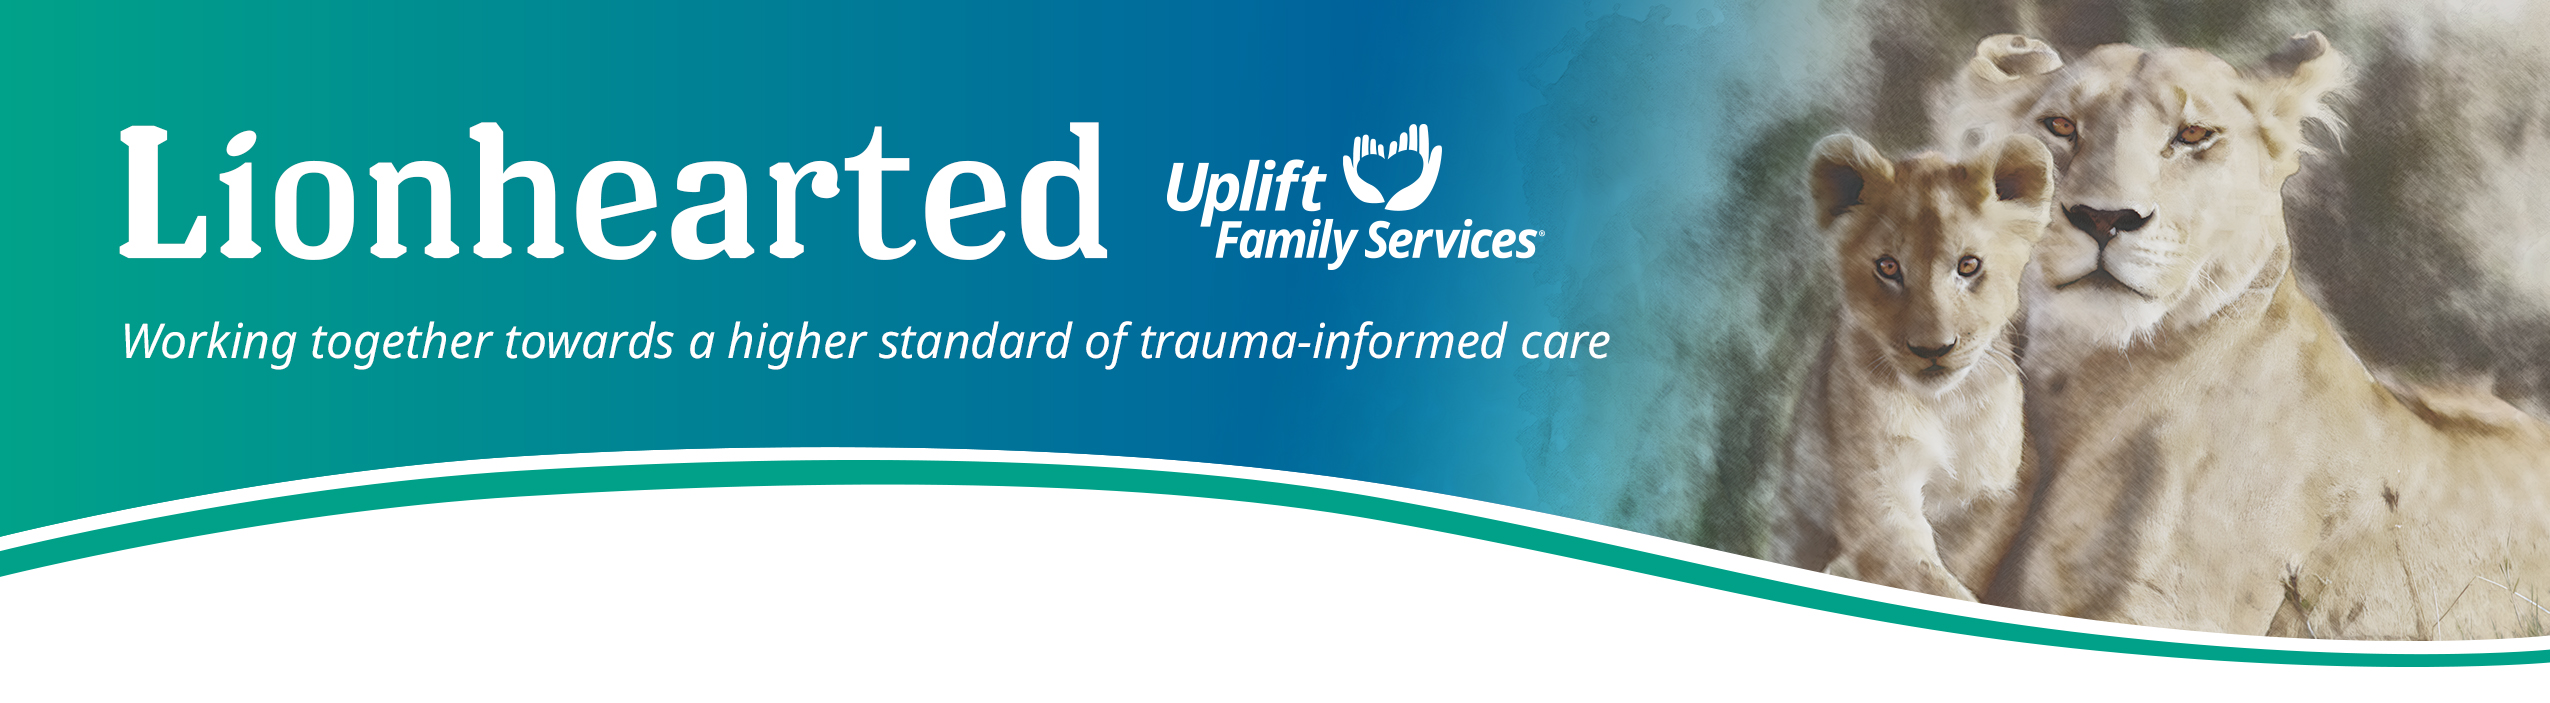 Lionhearted: Working together towards a higher standard of trauma-informed care header